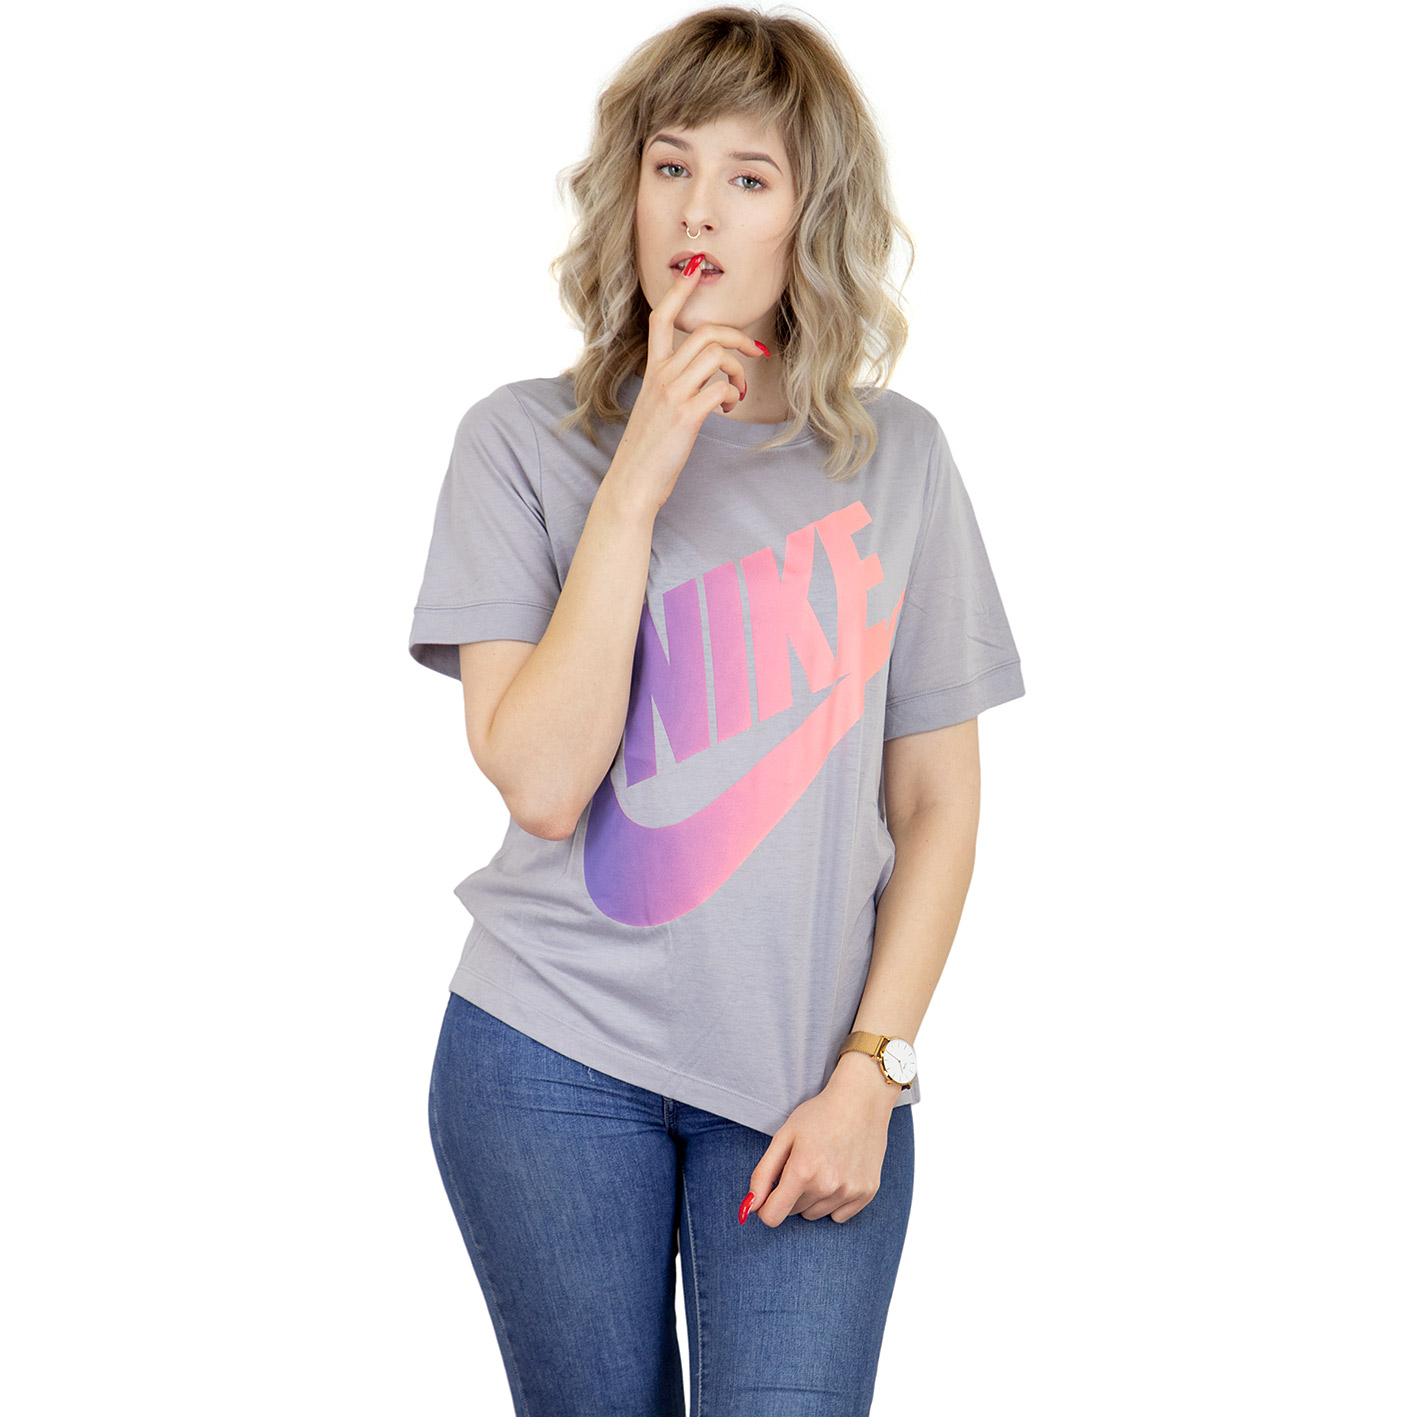 ☆ Nike Damen T-Shirt Futura grau/lila - hier bestellen!